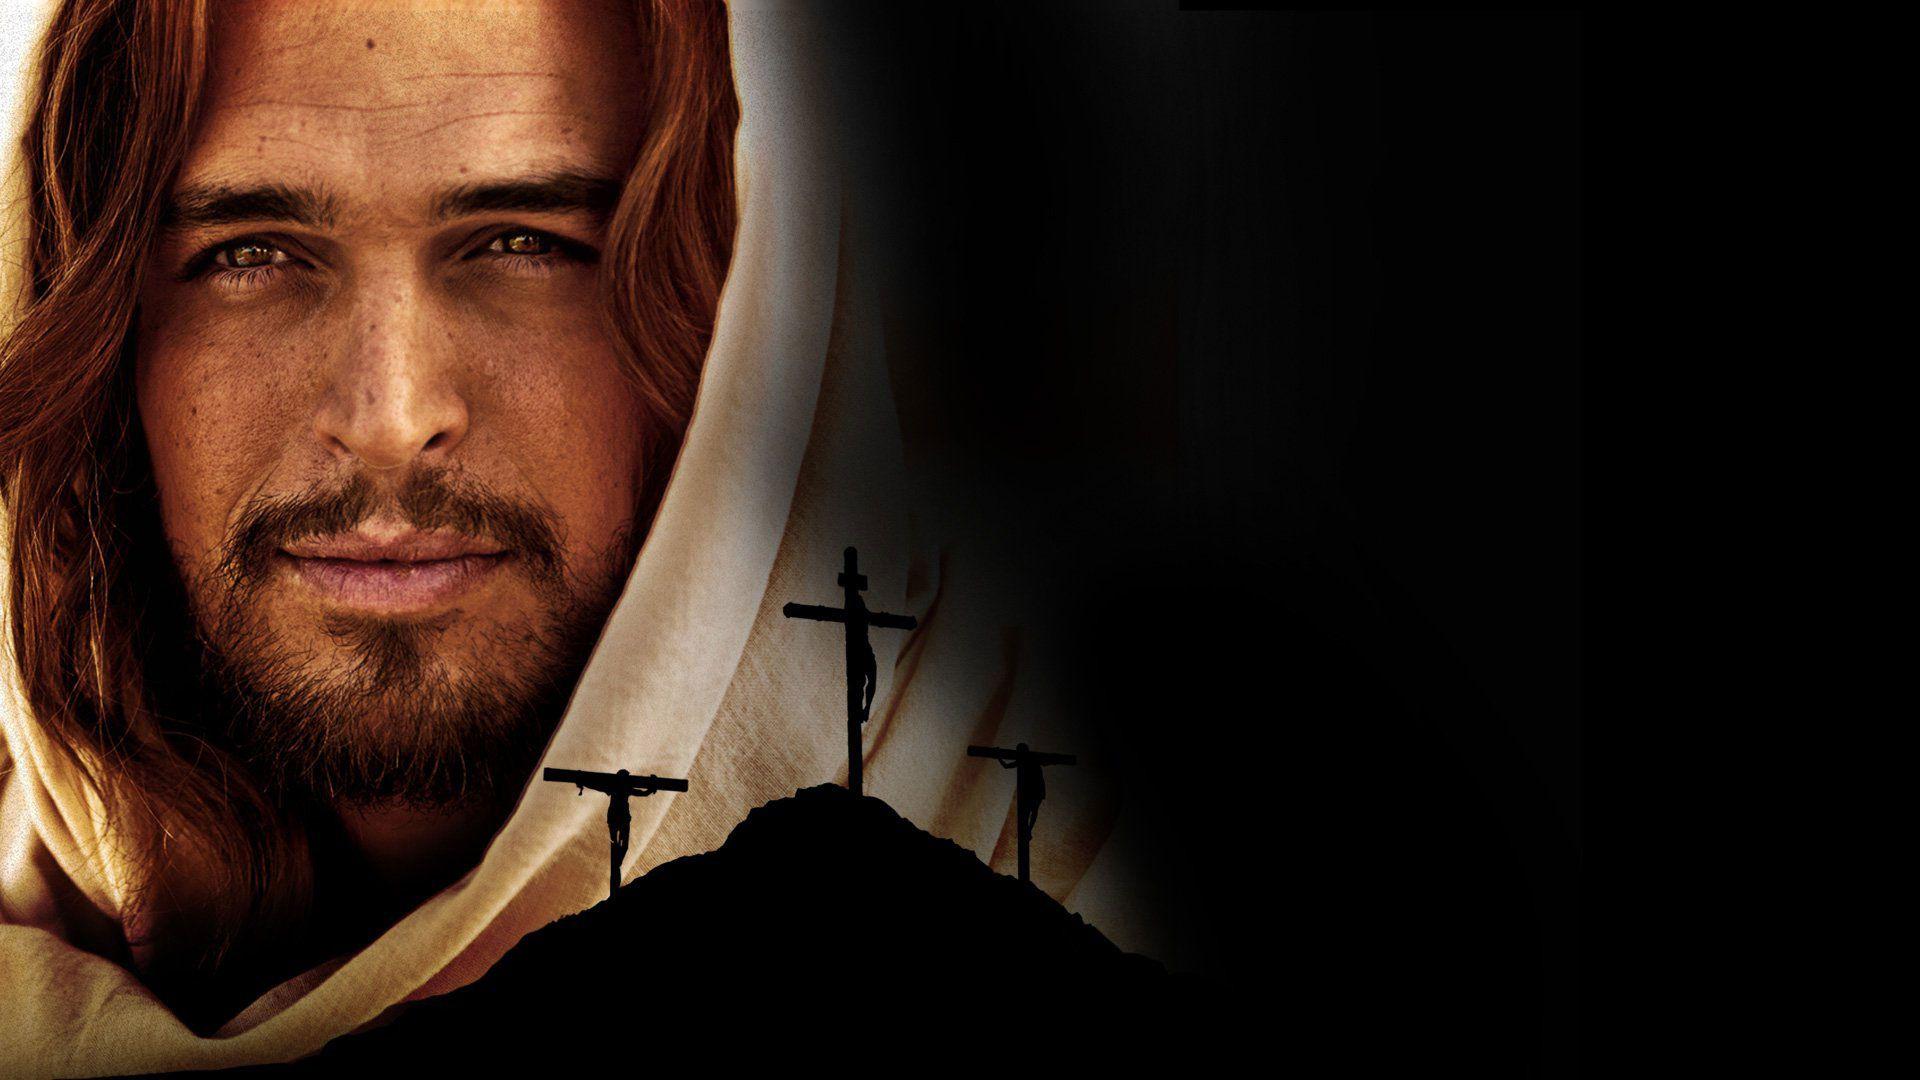 STUNNING ATTRACTIVE JESUS CHRIST 8 HD DESKTOP BACKGROUND WALLPAPER